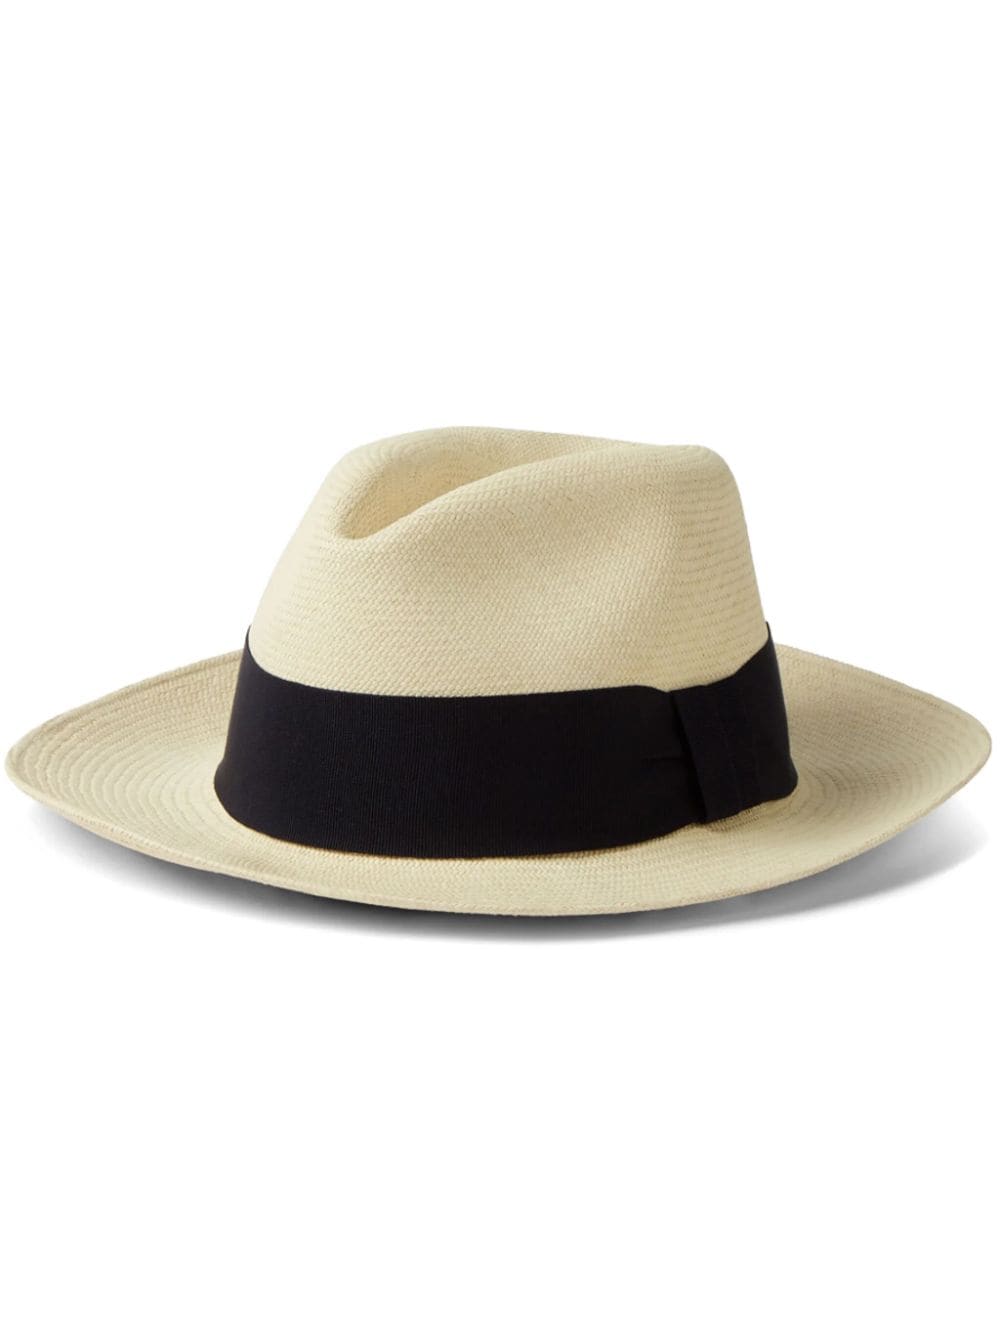 Rafael straw Panama hat